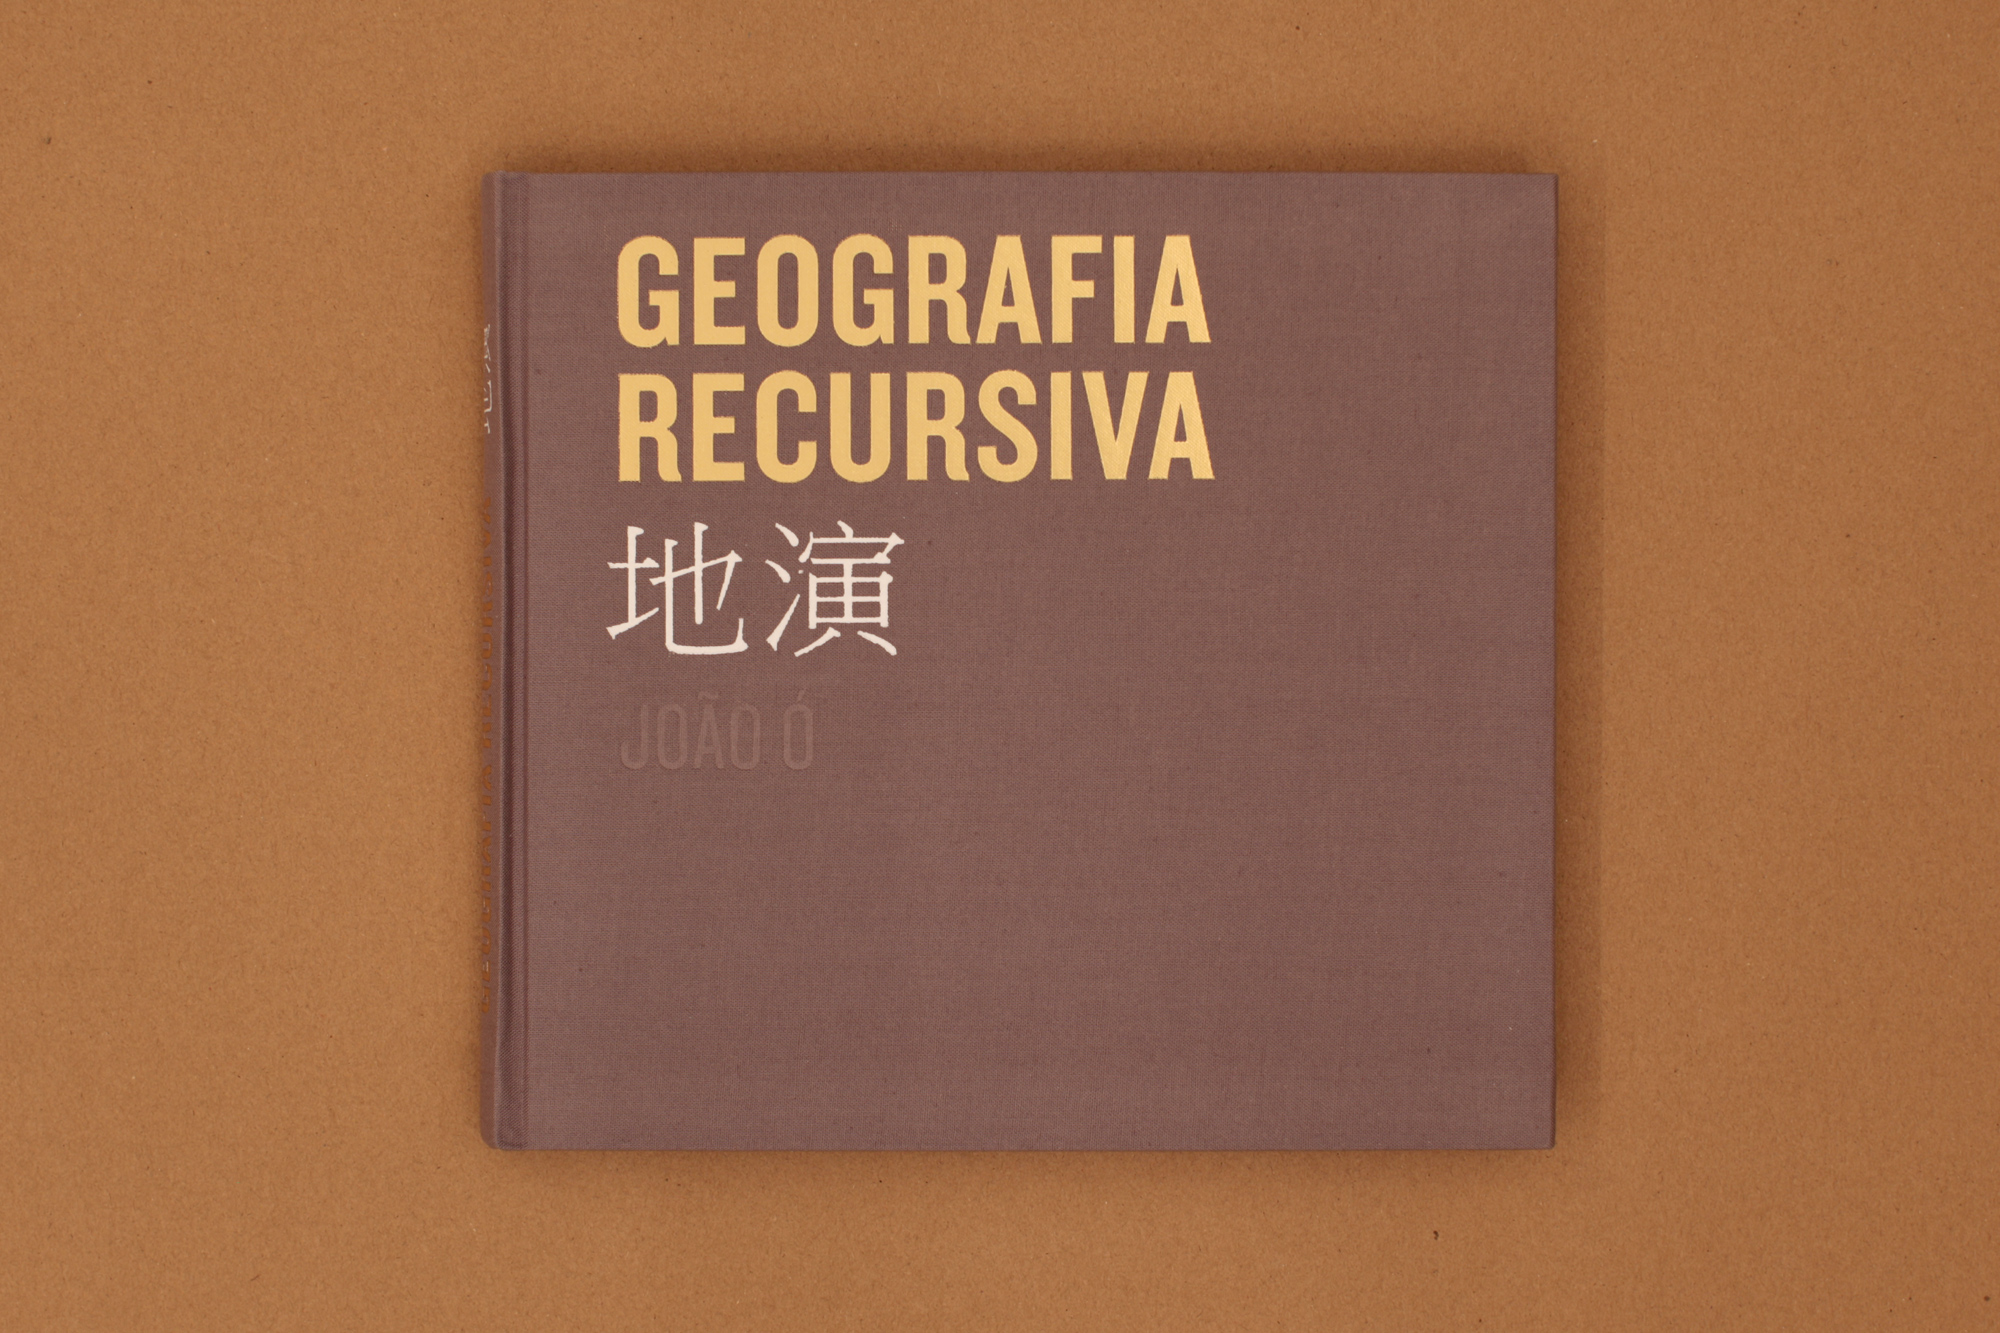 Recursive Geography : book design by Júlio da Costa Pinto